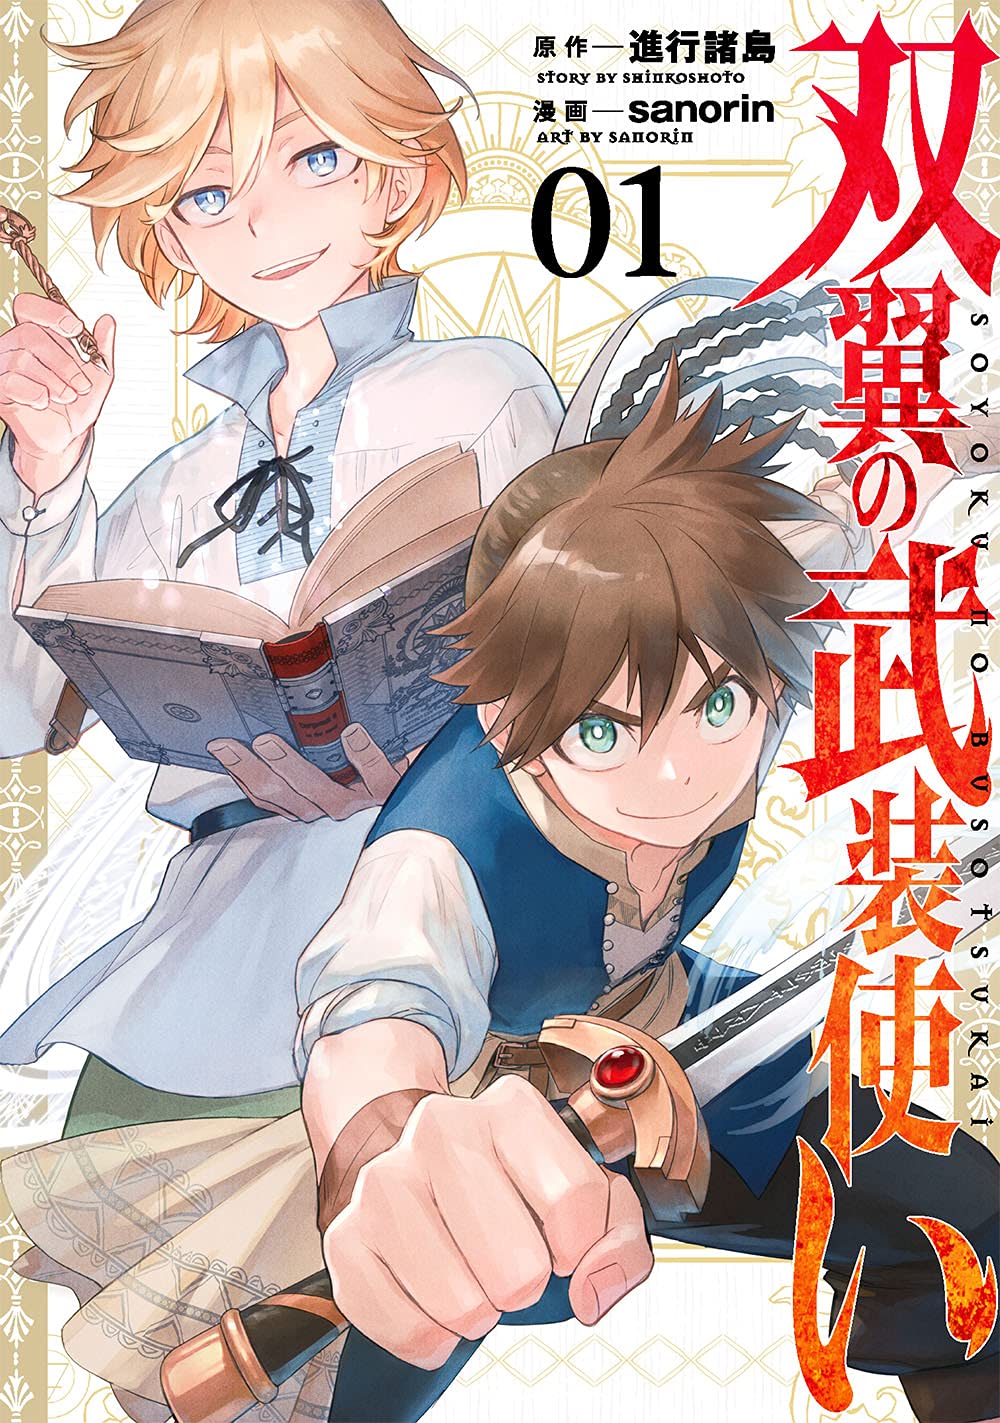 Dualing Fighters (manga) - Anime News Network